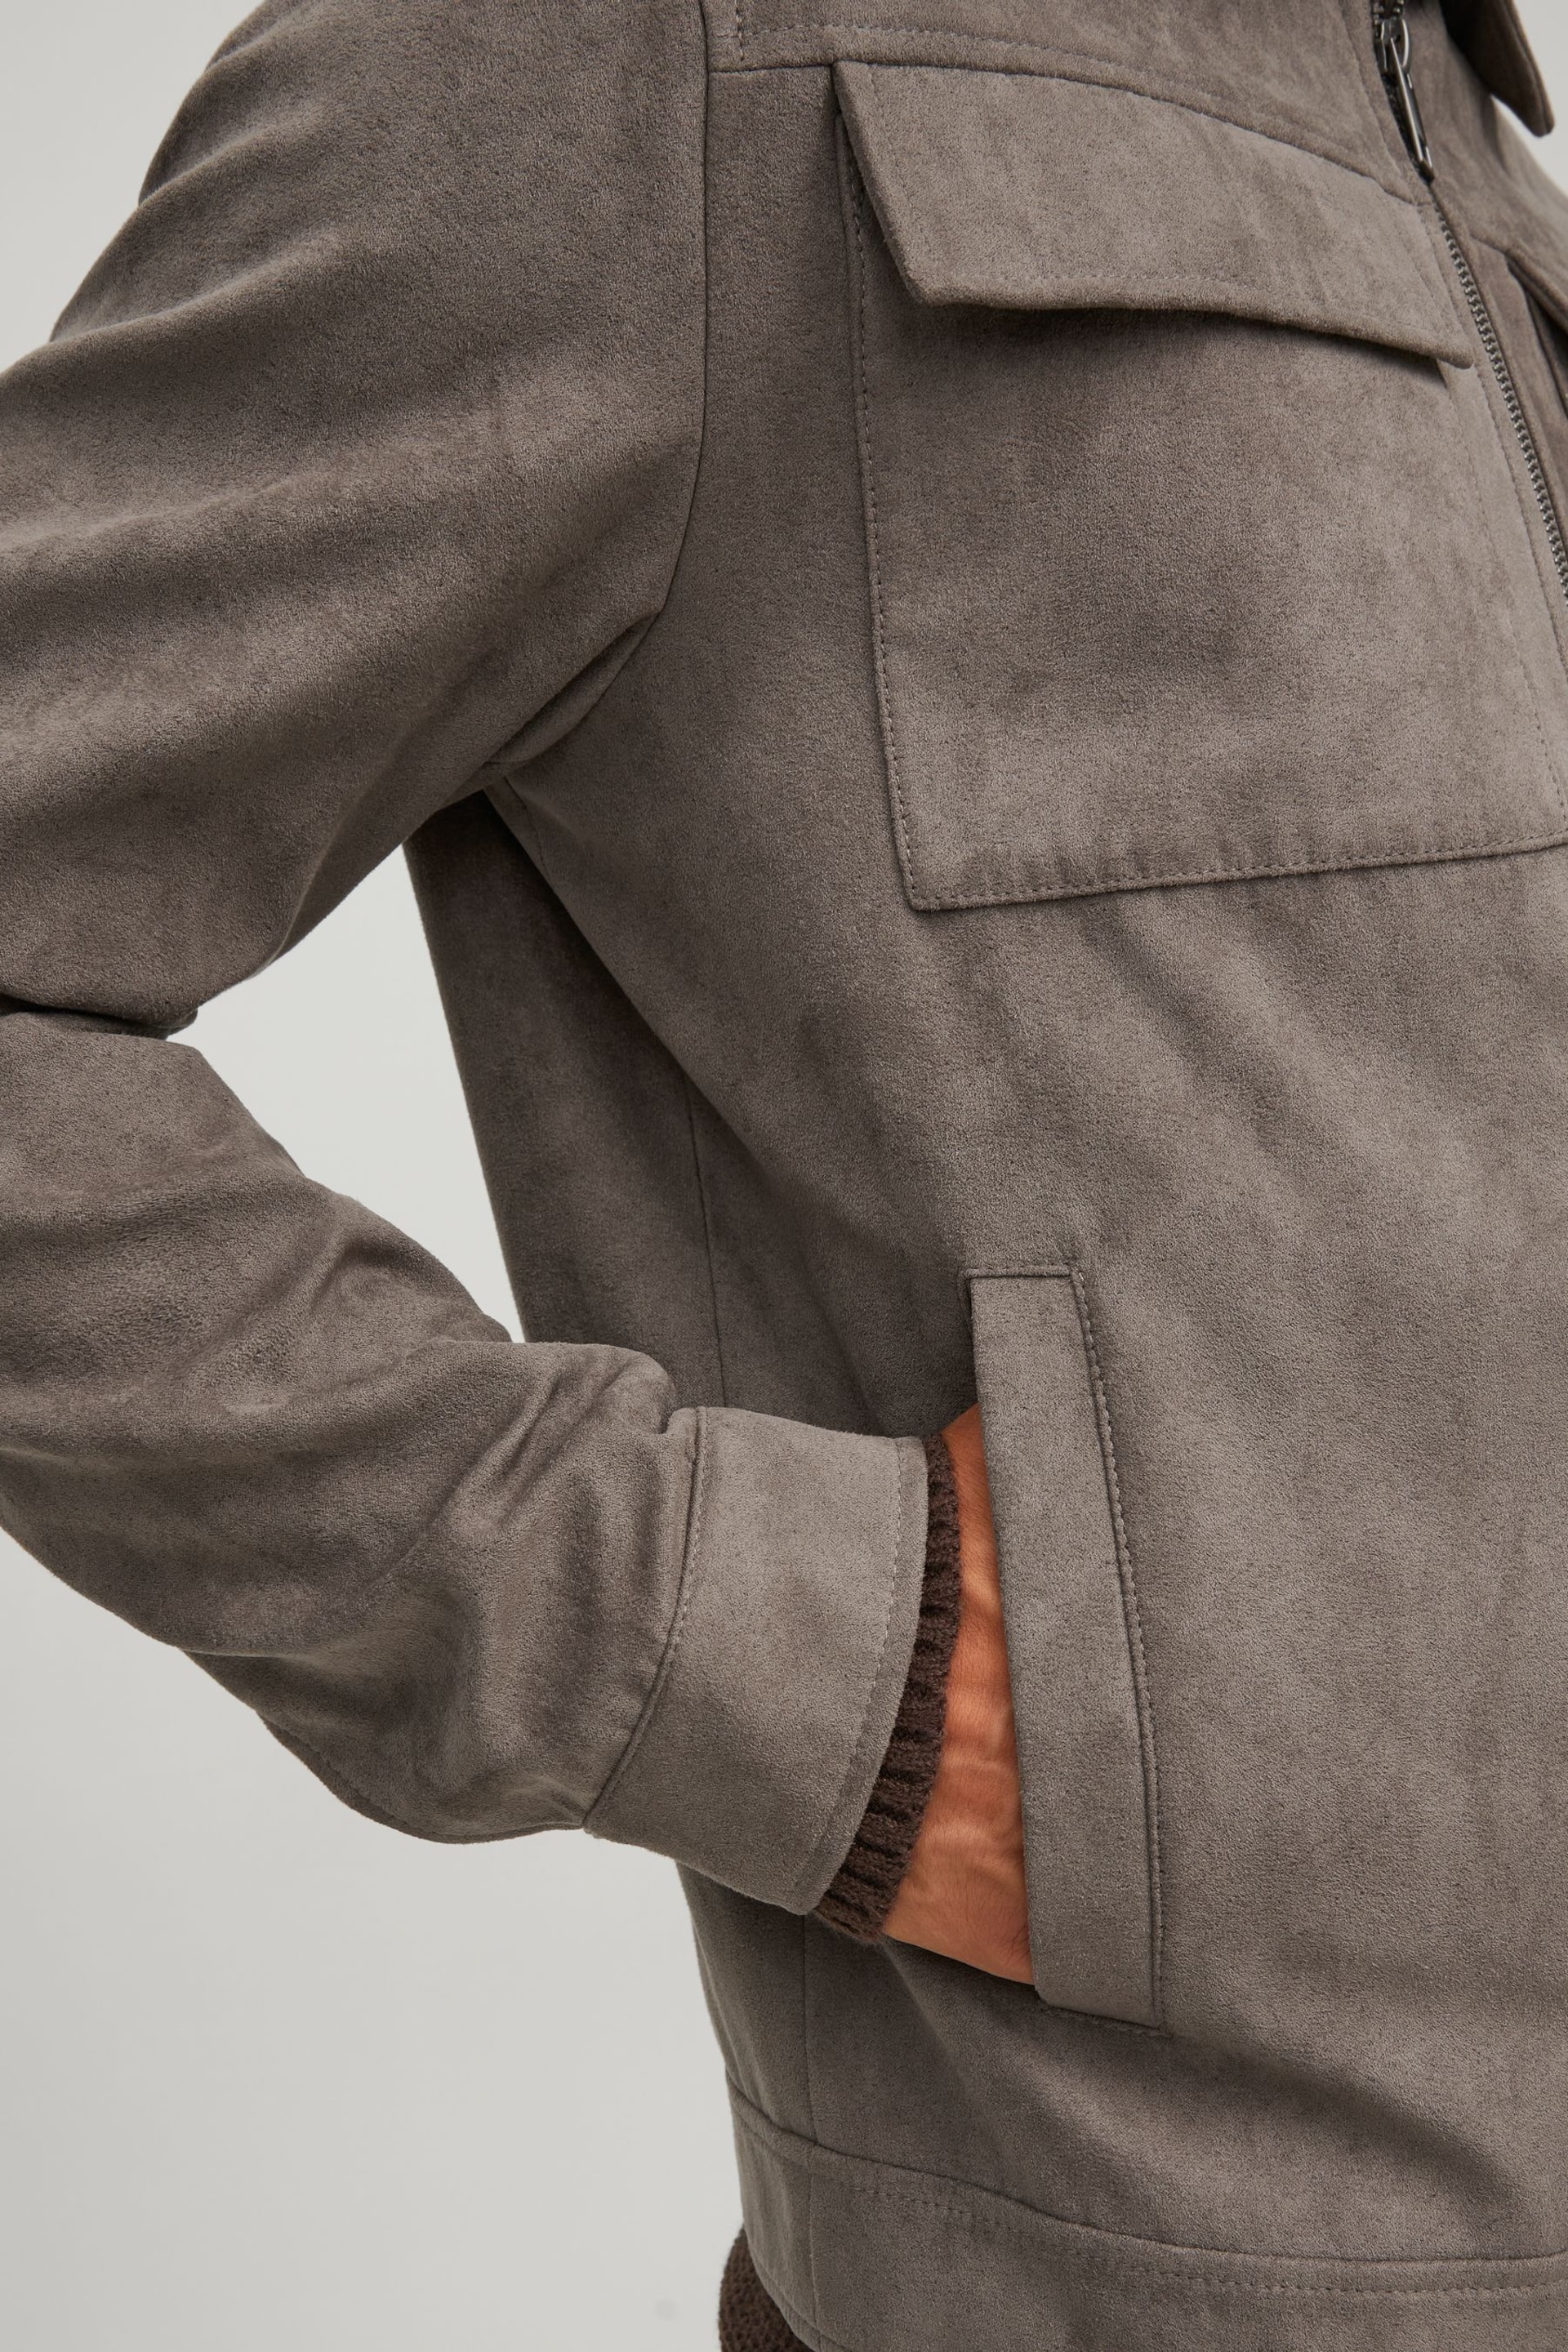 JACK & JONES Brown Faux Leather Utility Zip Up Jacket - Image 5 of 6